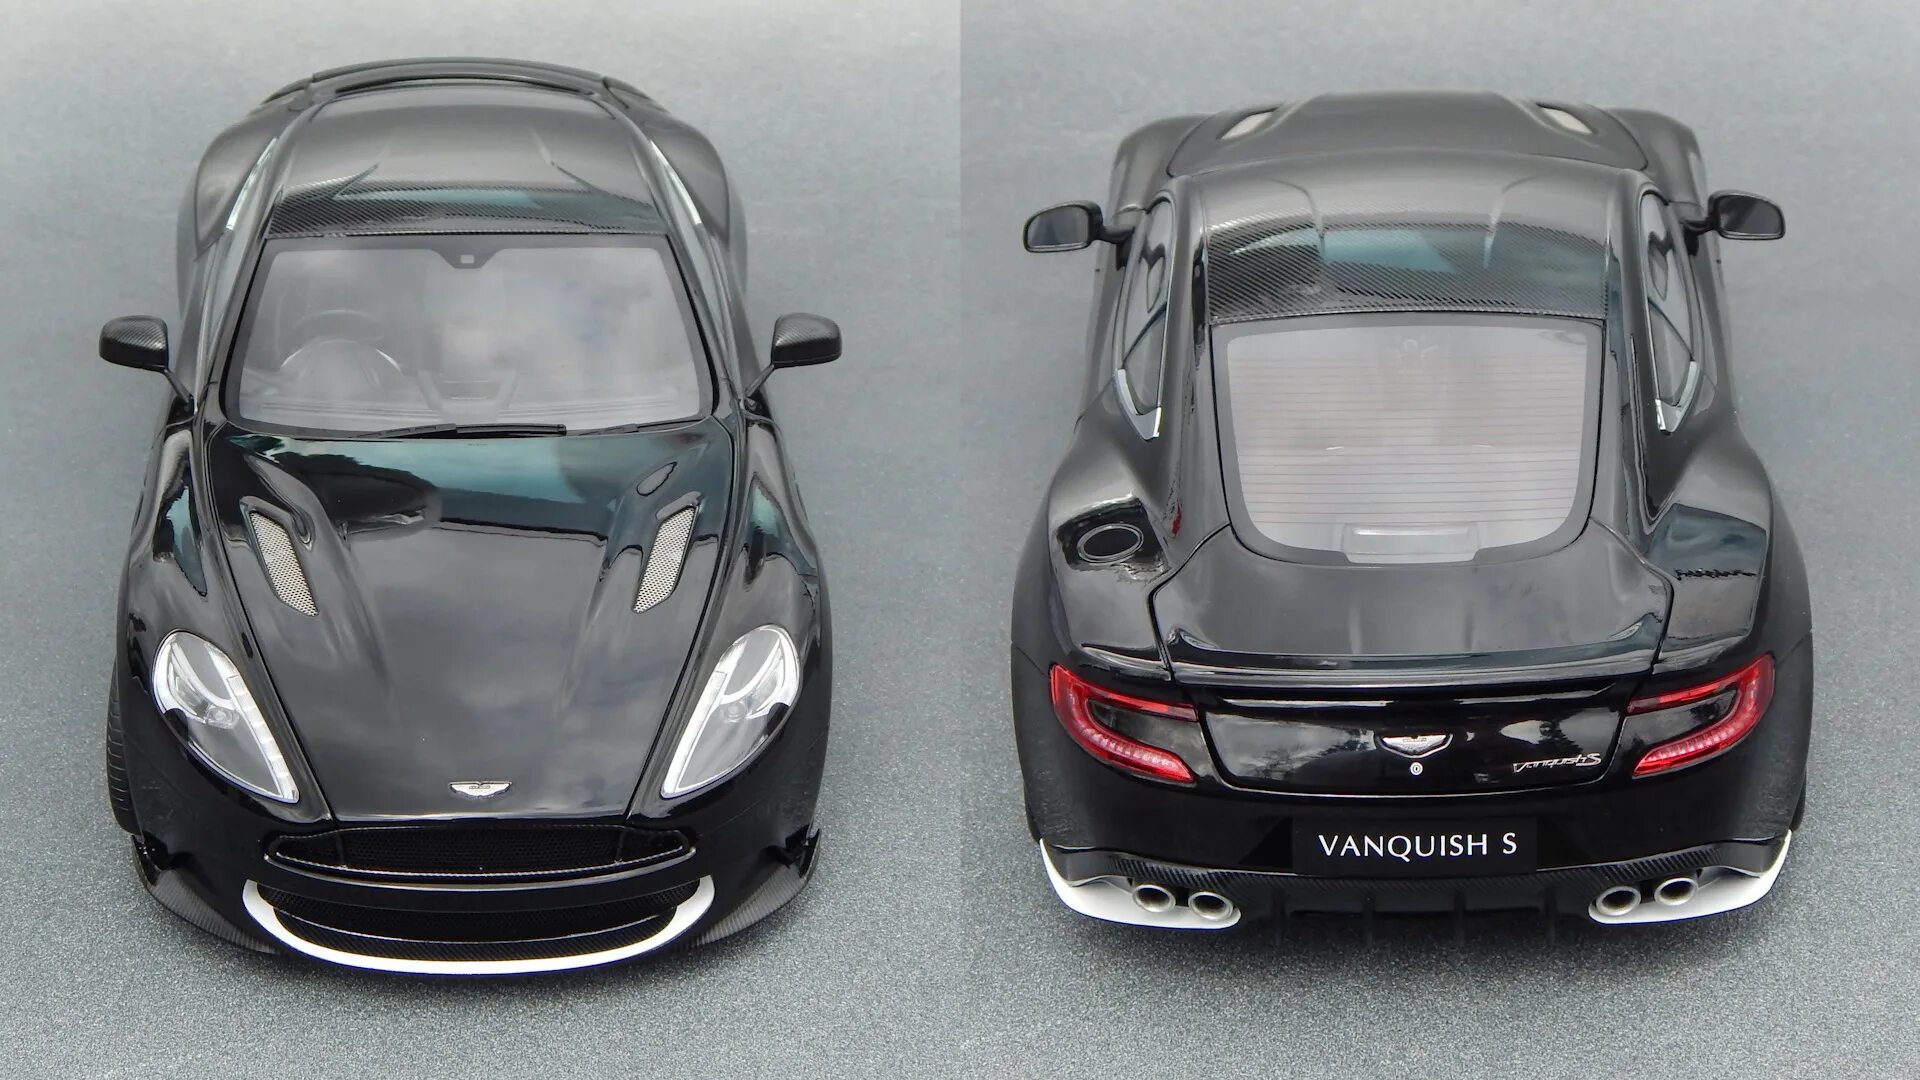 74 1 18. AUTOART 1 18. Aston Martin Vantage v12 gt3 1/18 AUTOART. Aston Martin DBS Superleggera AUTOART 1 18. Mercedes-AMG gt s AUTOART 1:18.